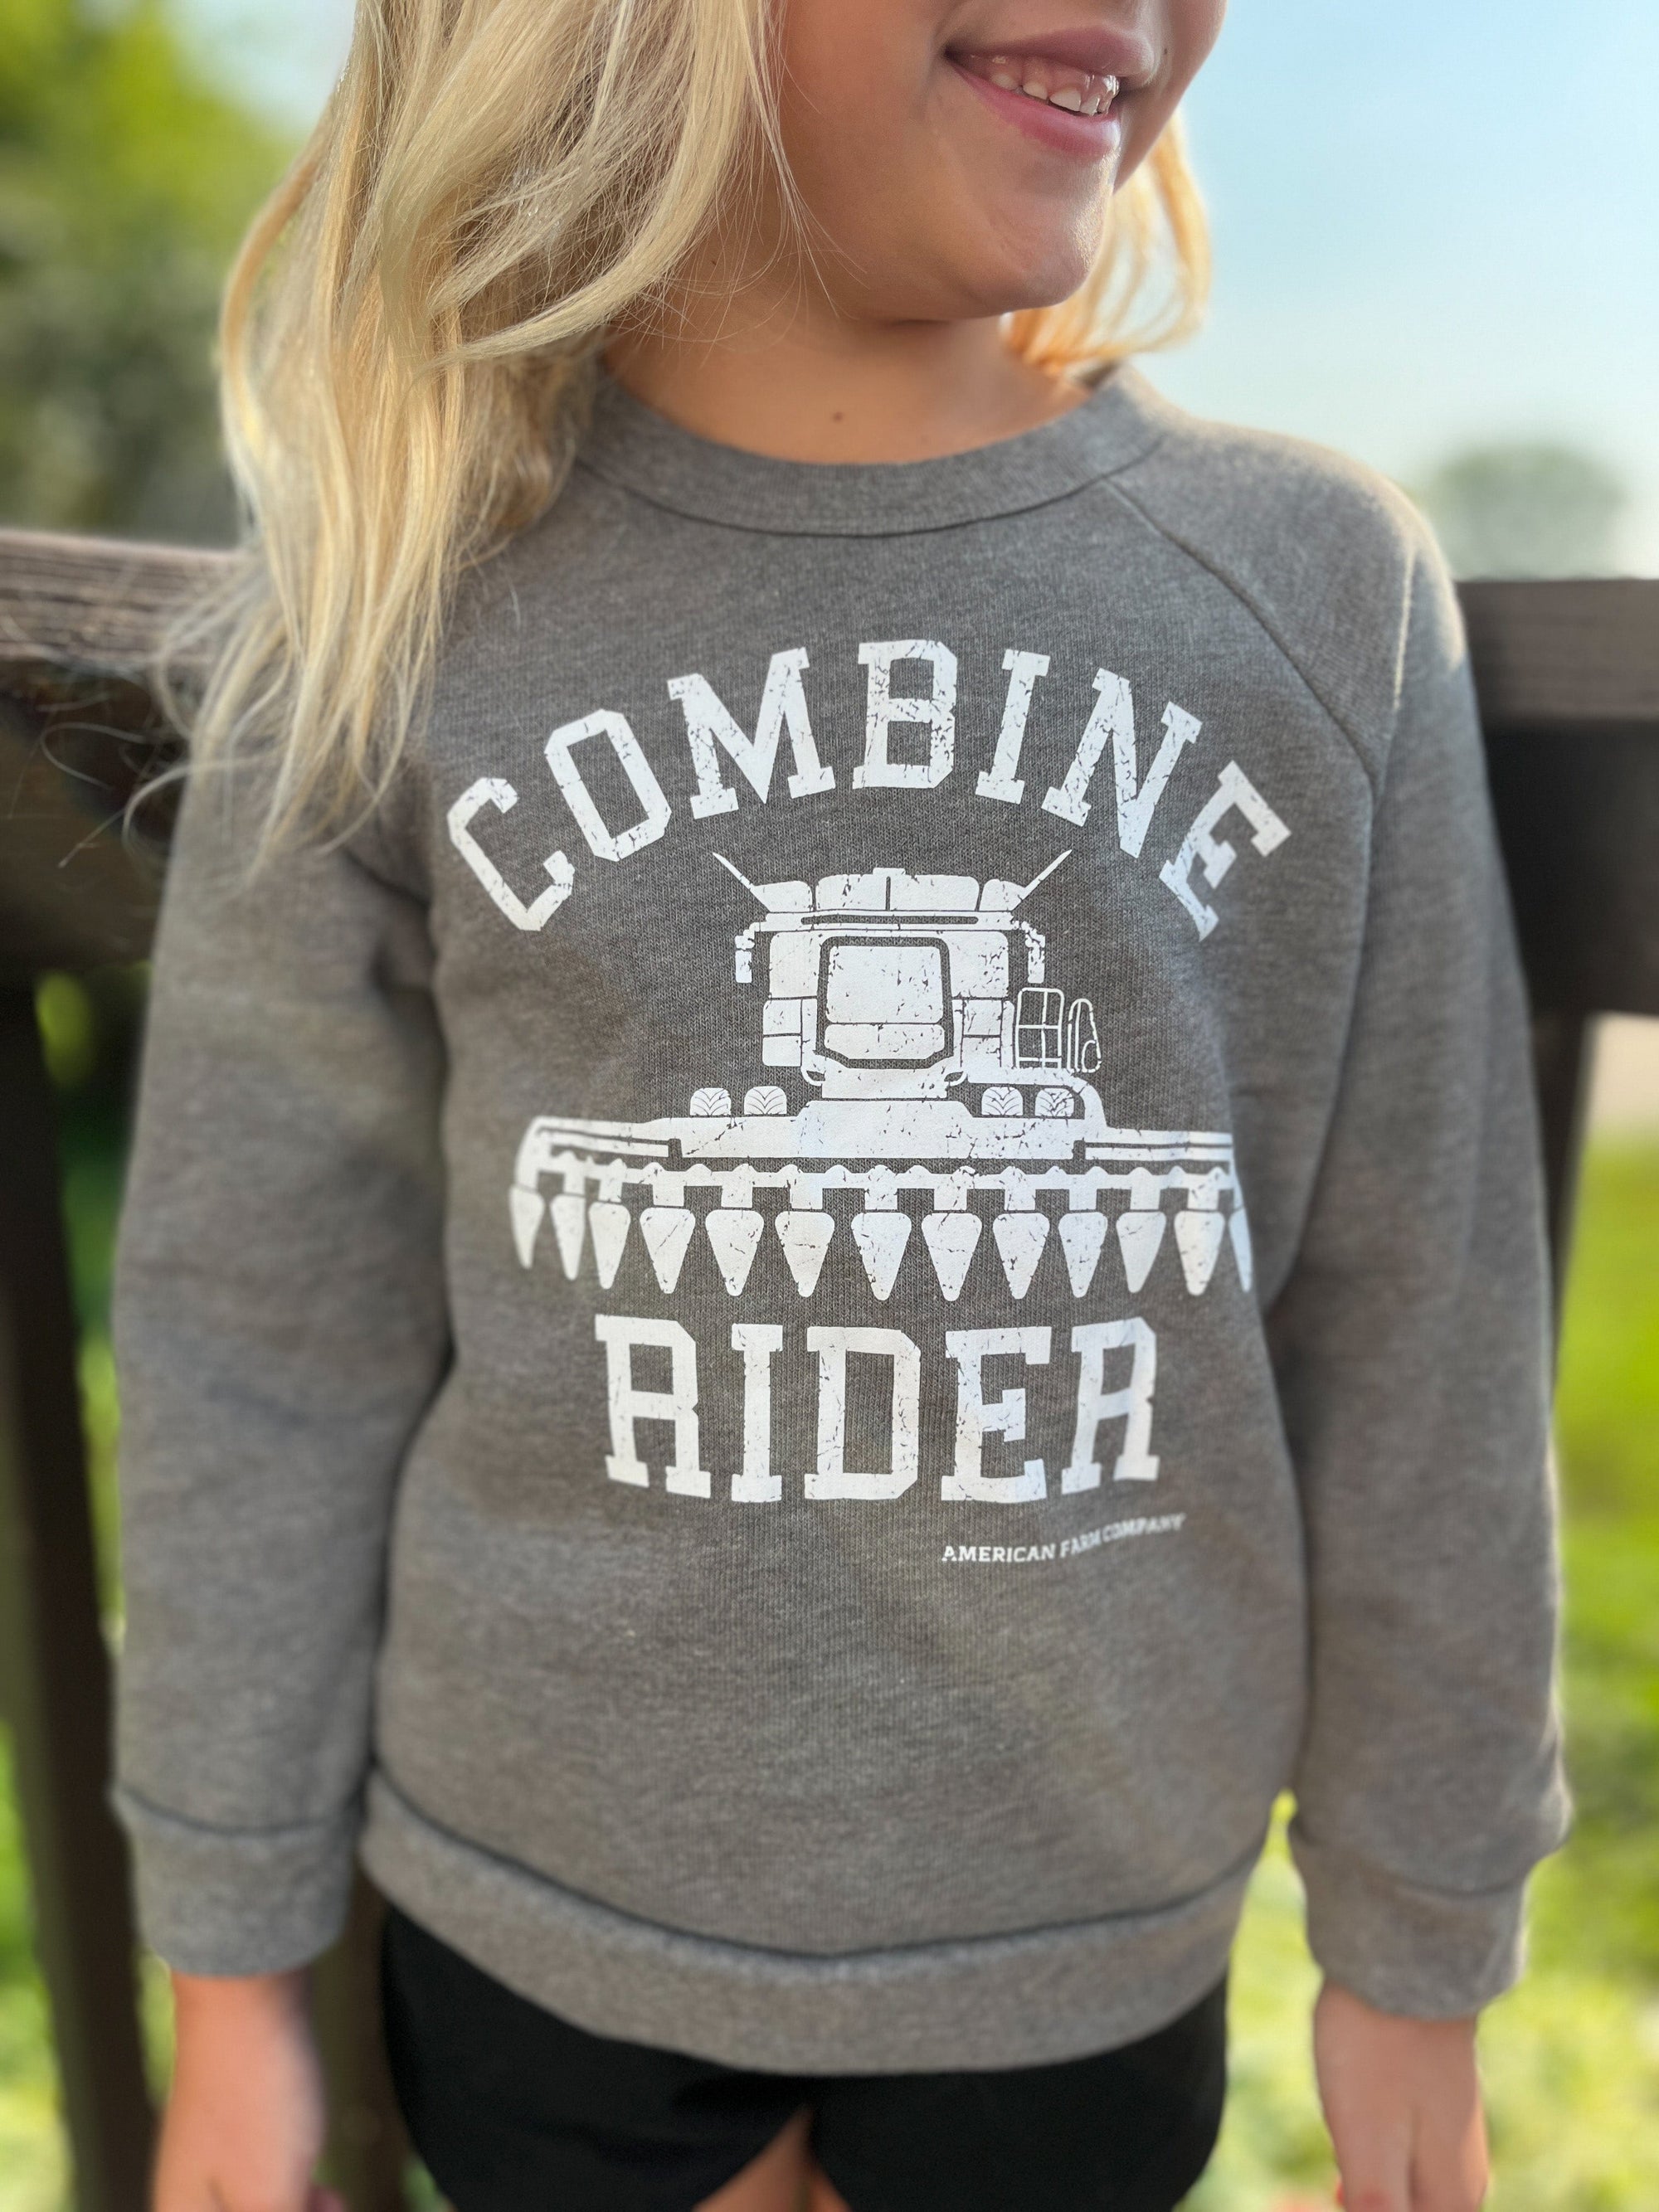 American Farm Company Crewneck Combine Rider Grey Toddler/Youth Crewnecks